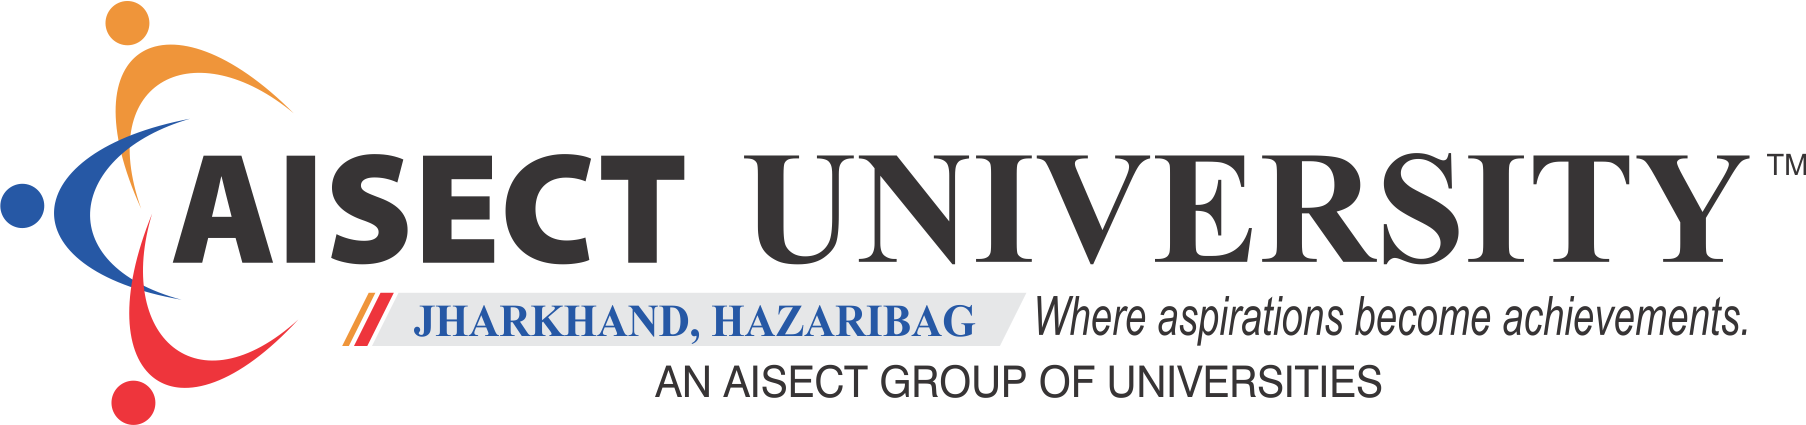 AISECT university|Universities|Education